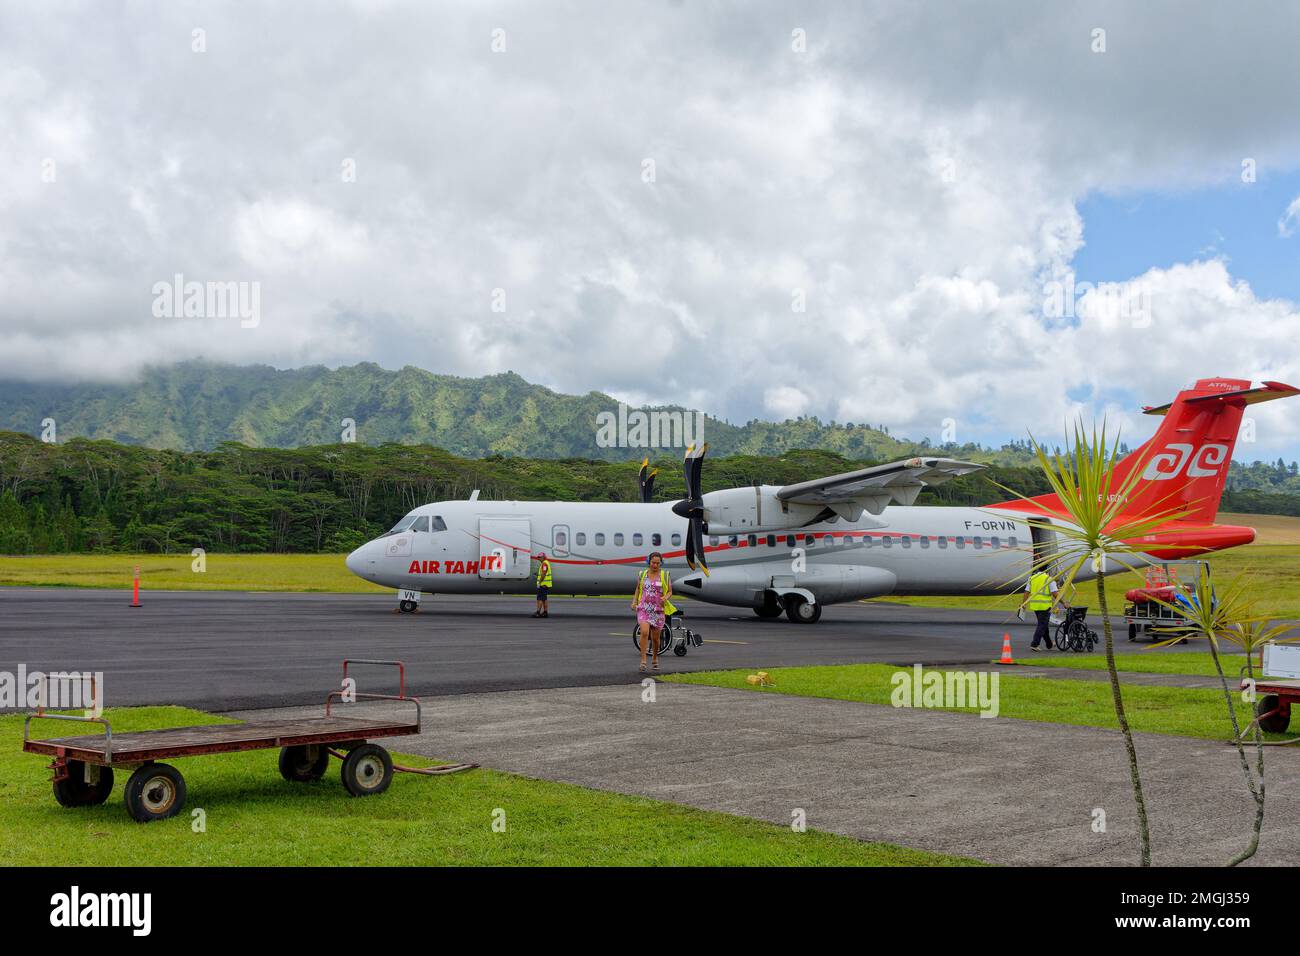 French Polynesia, Hiva Oa: Atuona Airport or Hiva Oa Airport Jacques ...